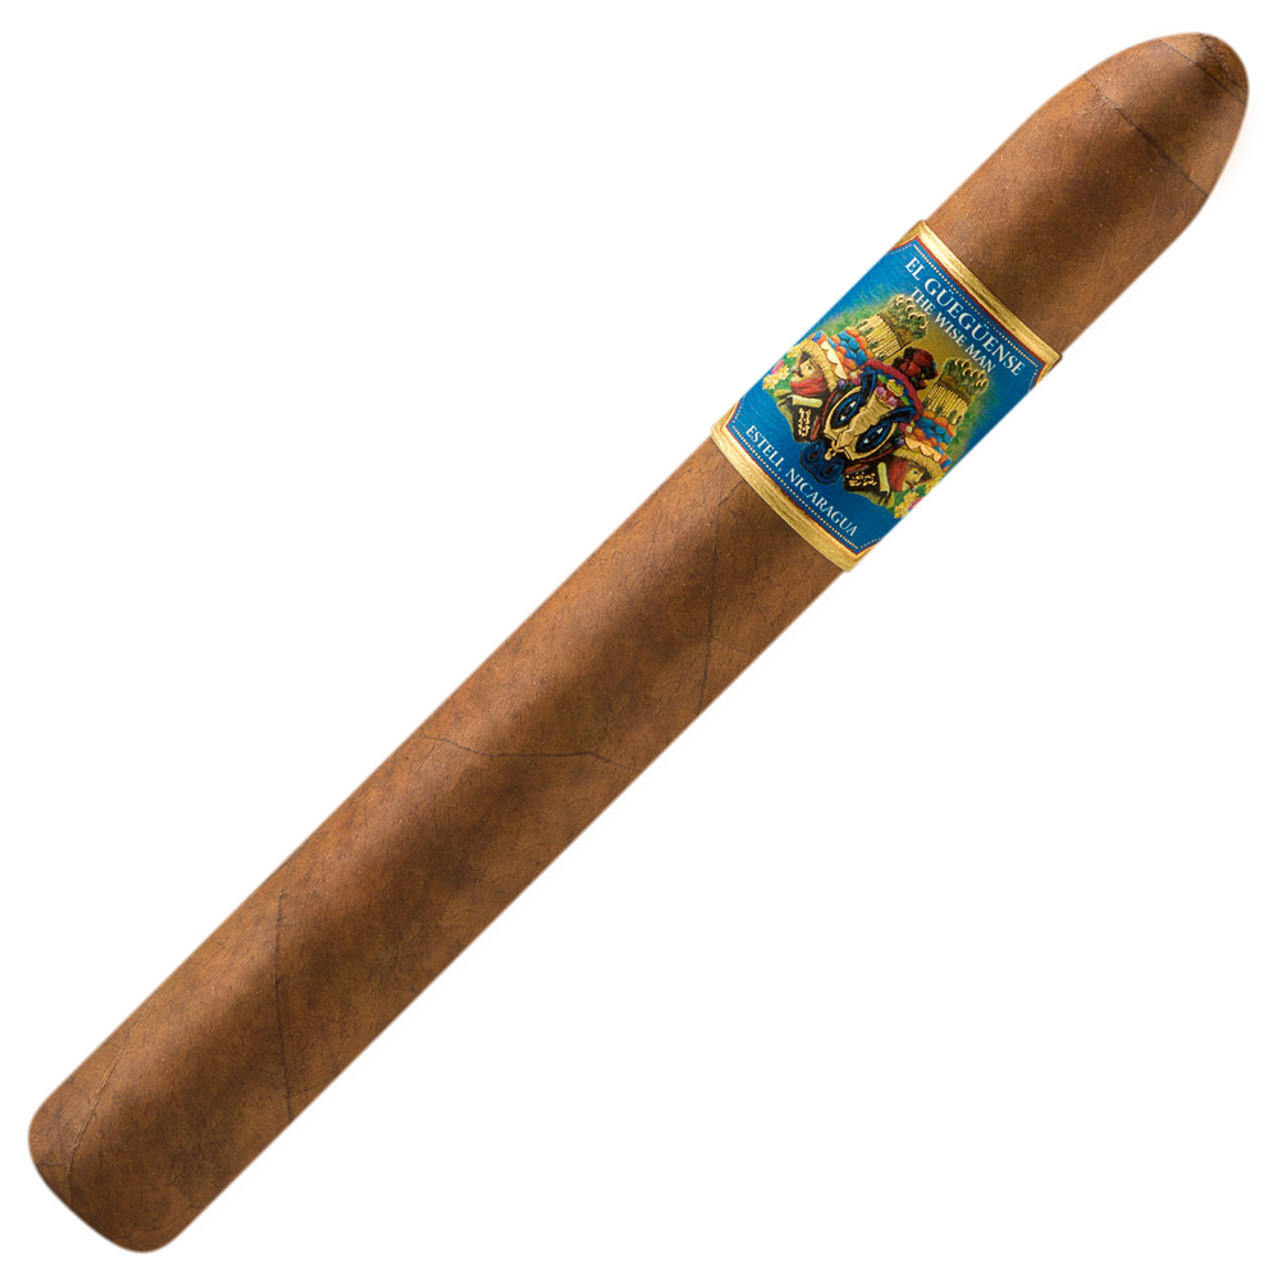 Foundation El Gueguense Torpedo Cigars - 6.25 x 52 (Box of 25)